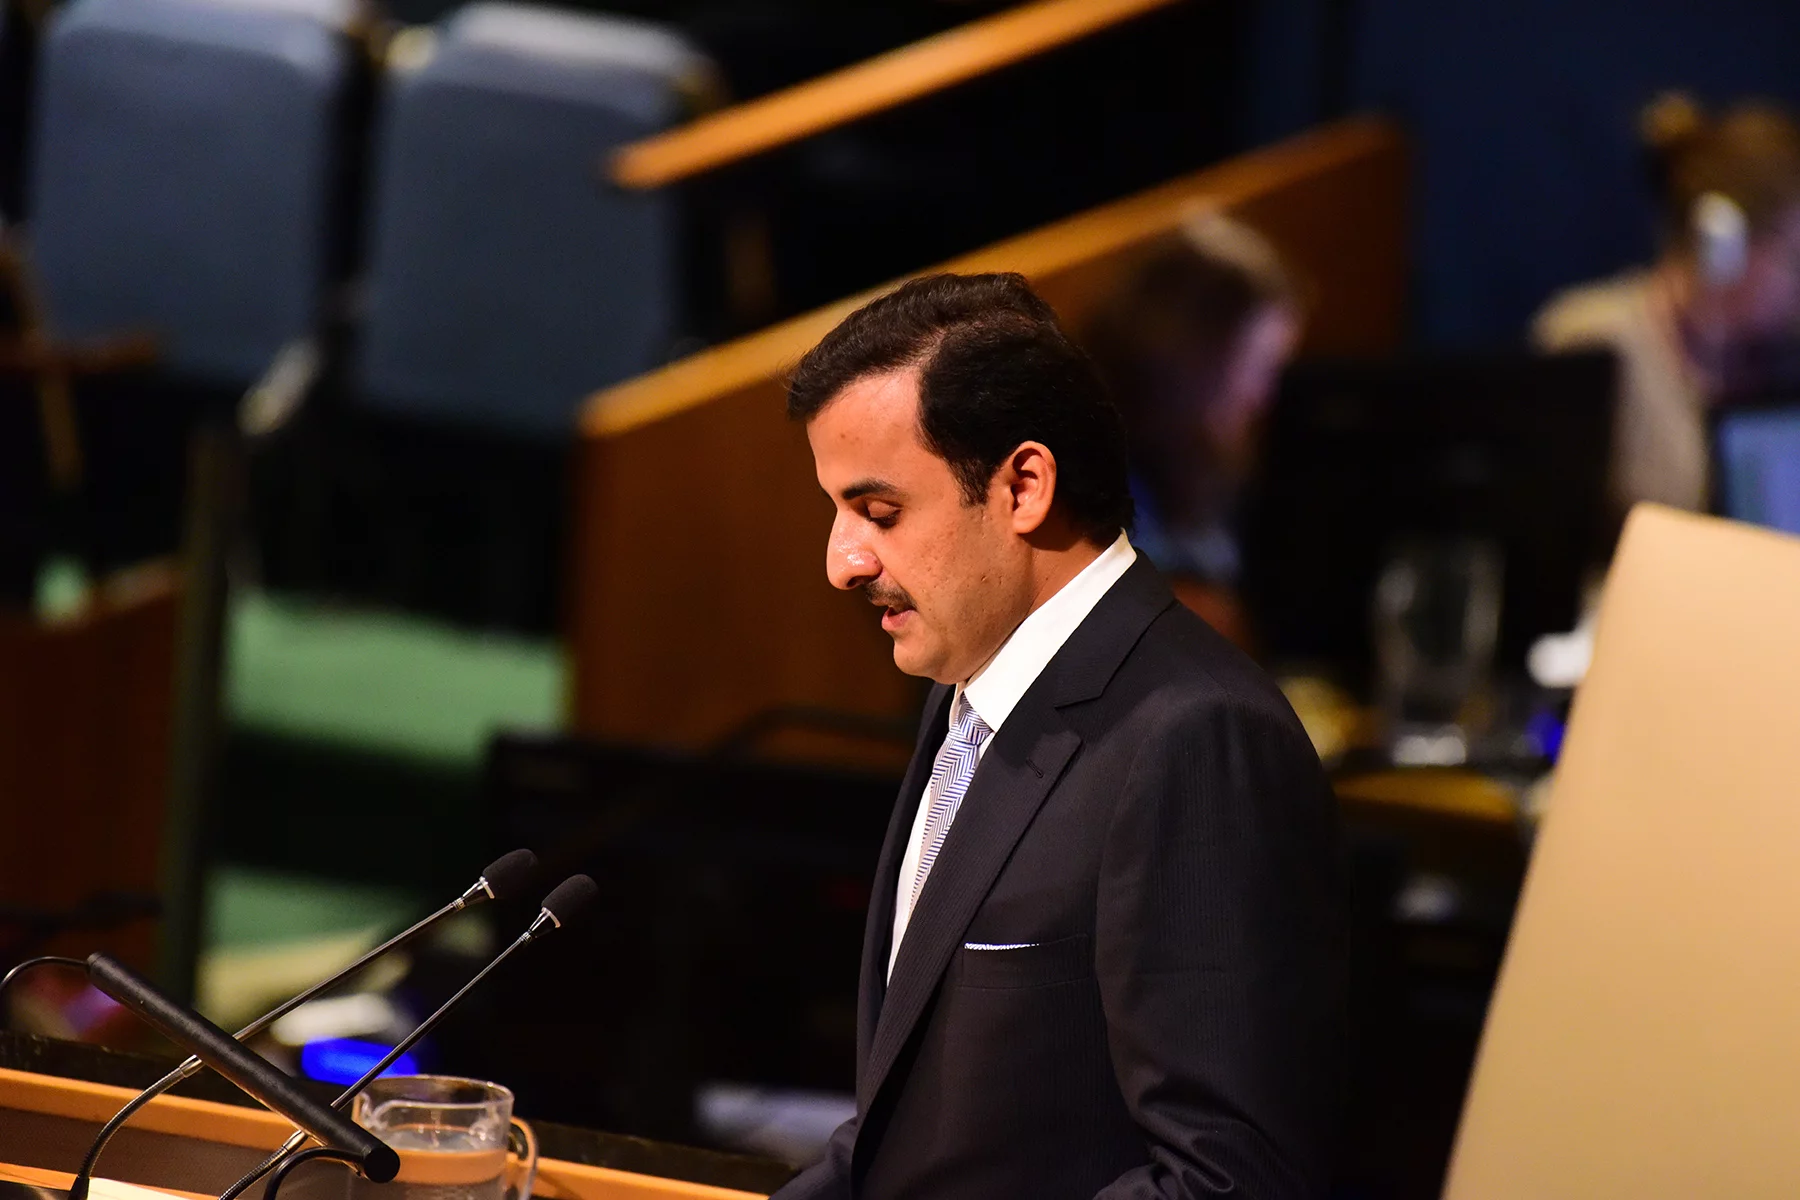 Sheikh Tamim bin Hamad Al-Thani addressing the UN General Assembly